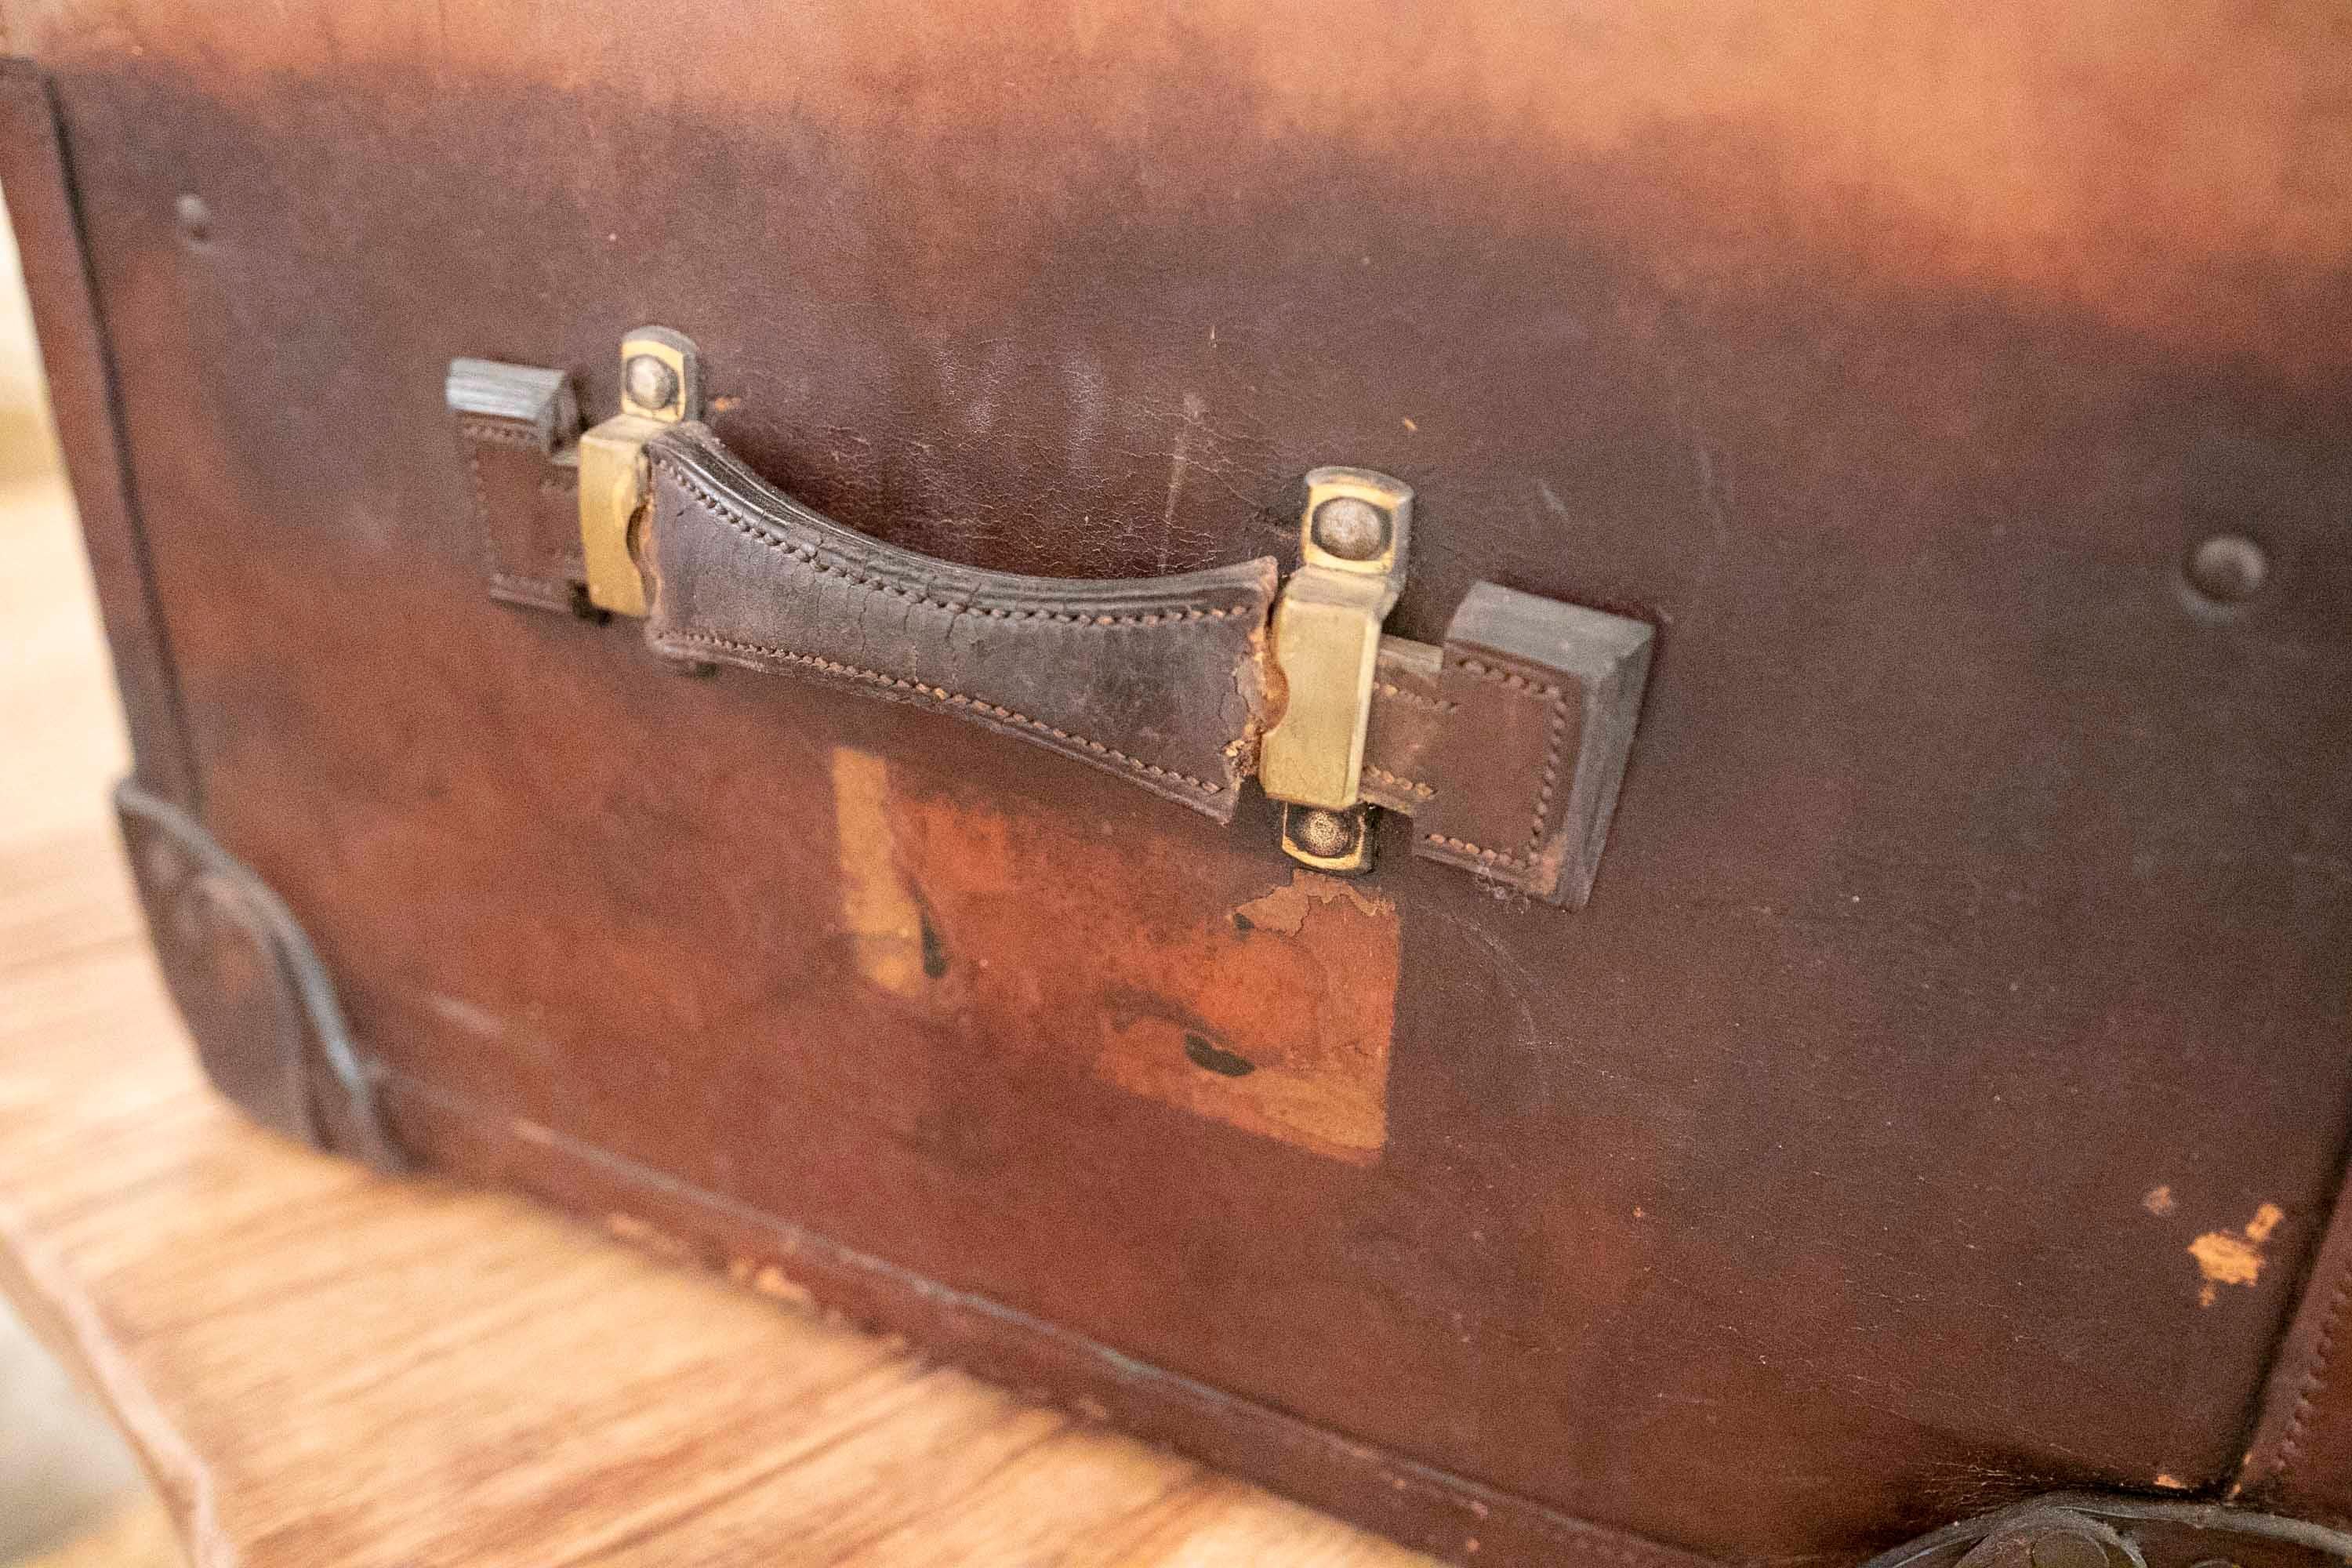 1950s suitcase